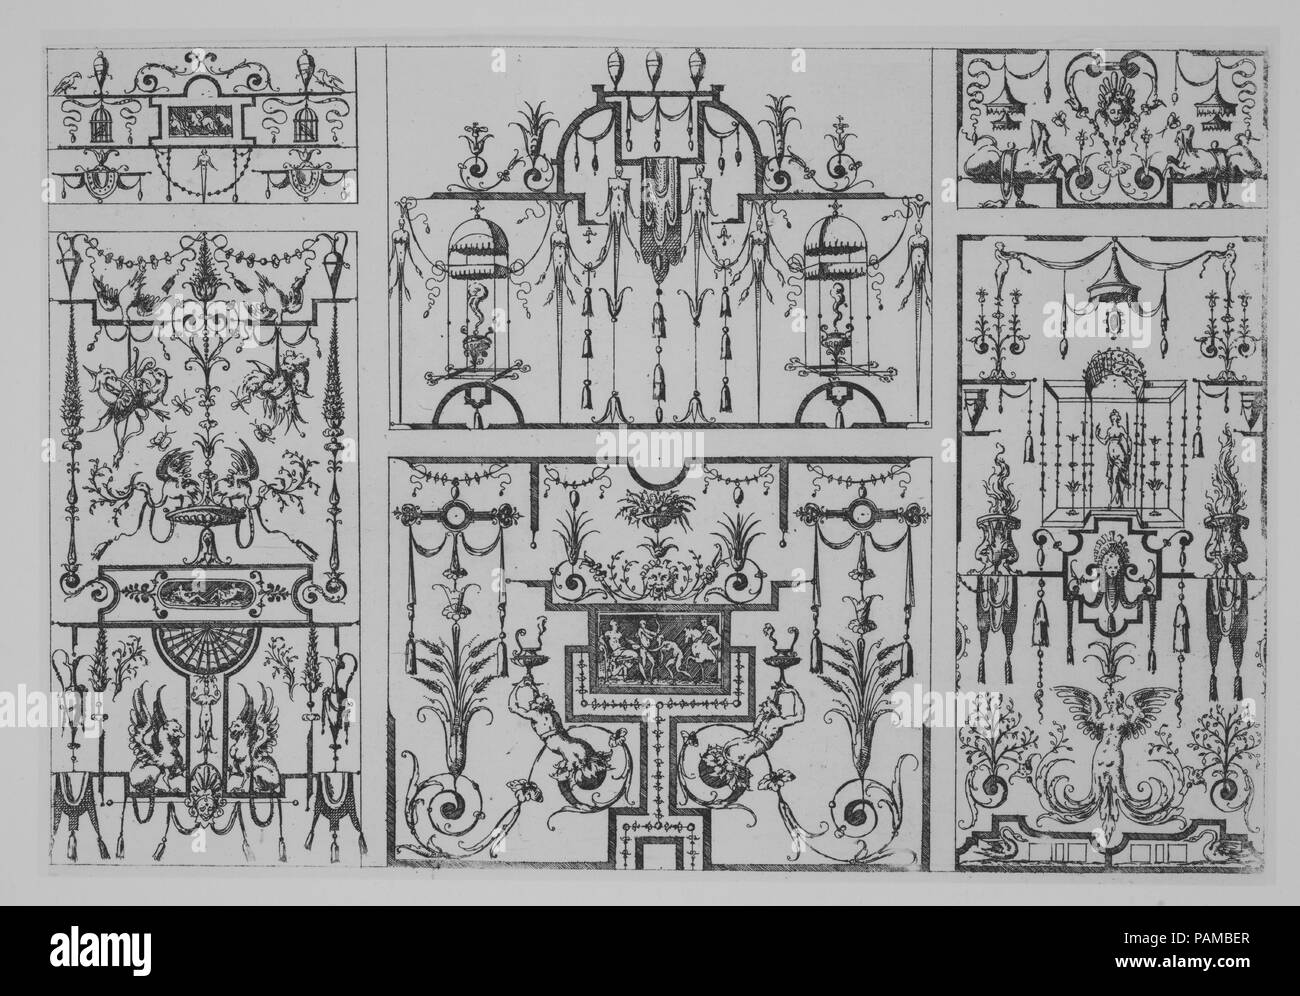 Grotesque Ornament Panel. Artist: Jacques Androuet Du Cerceau (French, Paris 1510/12-1585 Annecy). Dimensions: Sheet (trimmed): 6 7/16 × 9 9/16 in. (16.3 × 24.3 cm). Series/Portfolio: Livre de Grotesques. Date: 1566. Museum: Metropolitan Museum of Art, New York, USA. Stock Photo